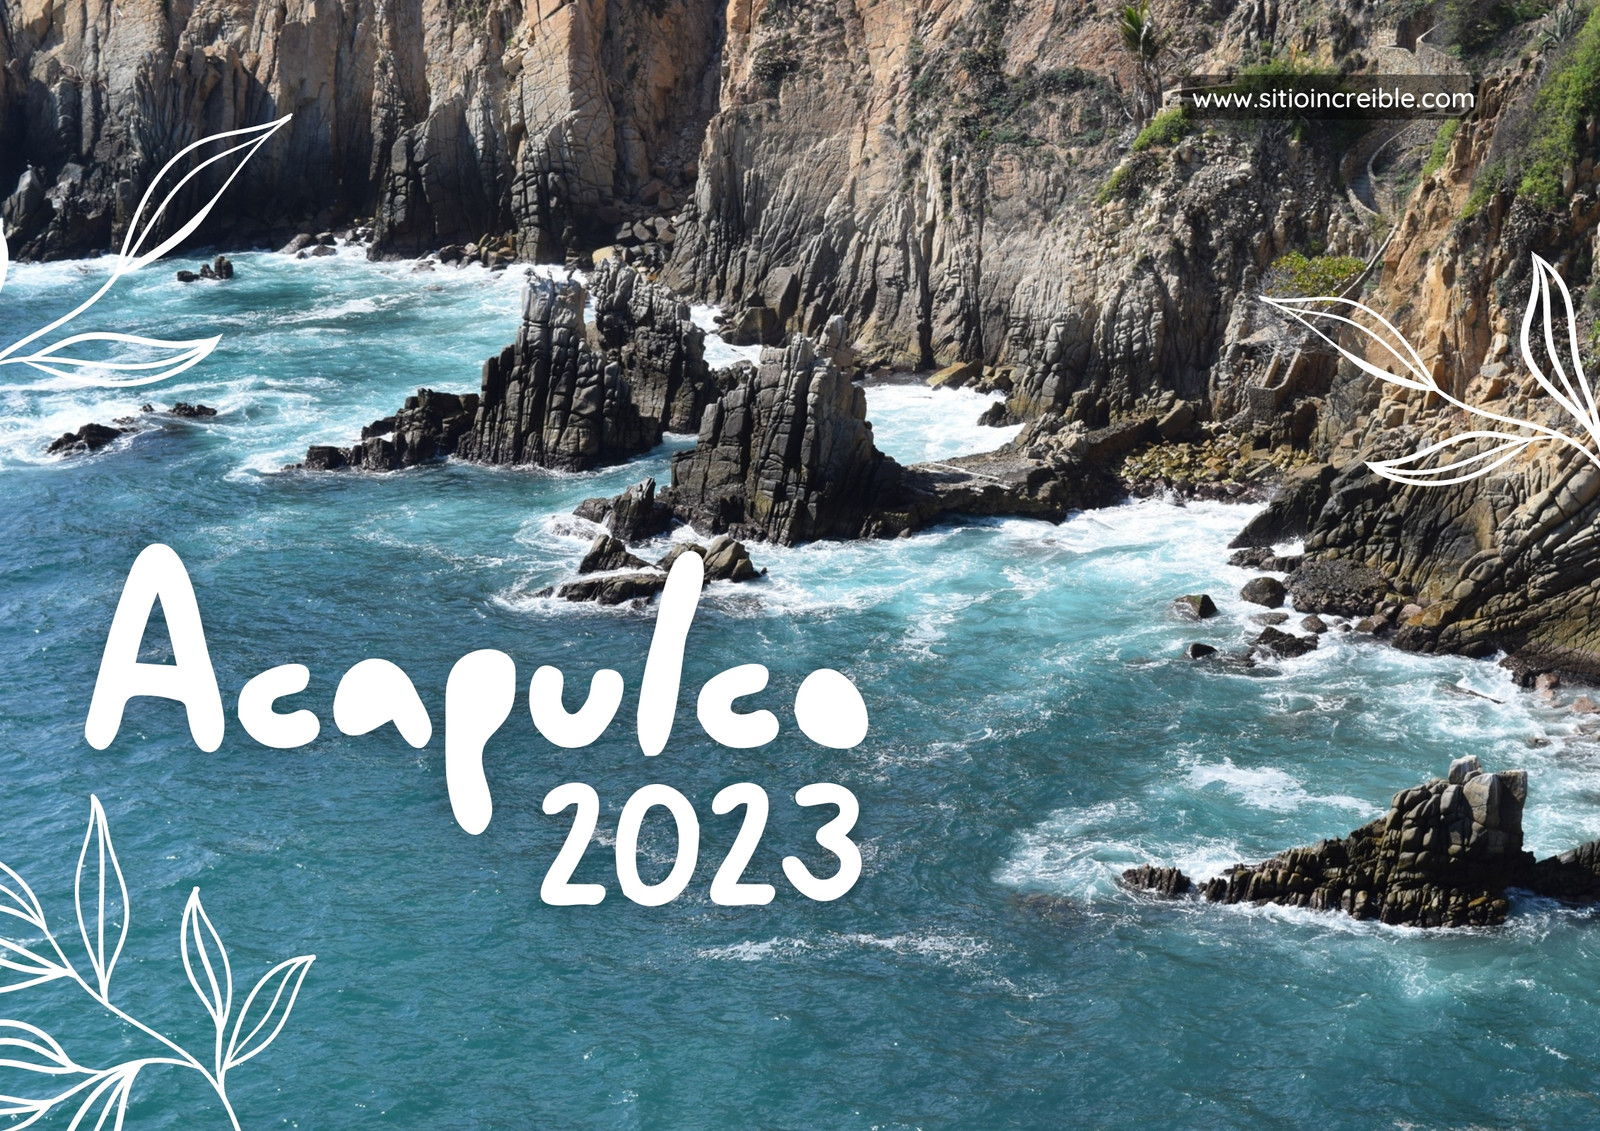 Calendario de Pared Acapulco 2023 Moderno Celeste y Blanco